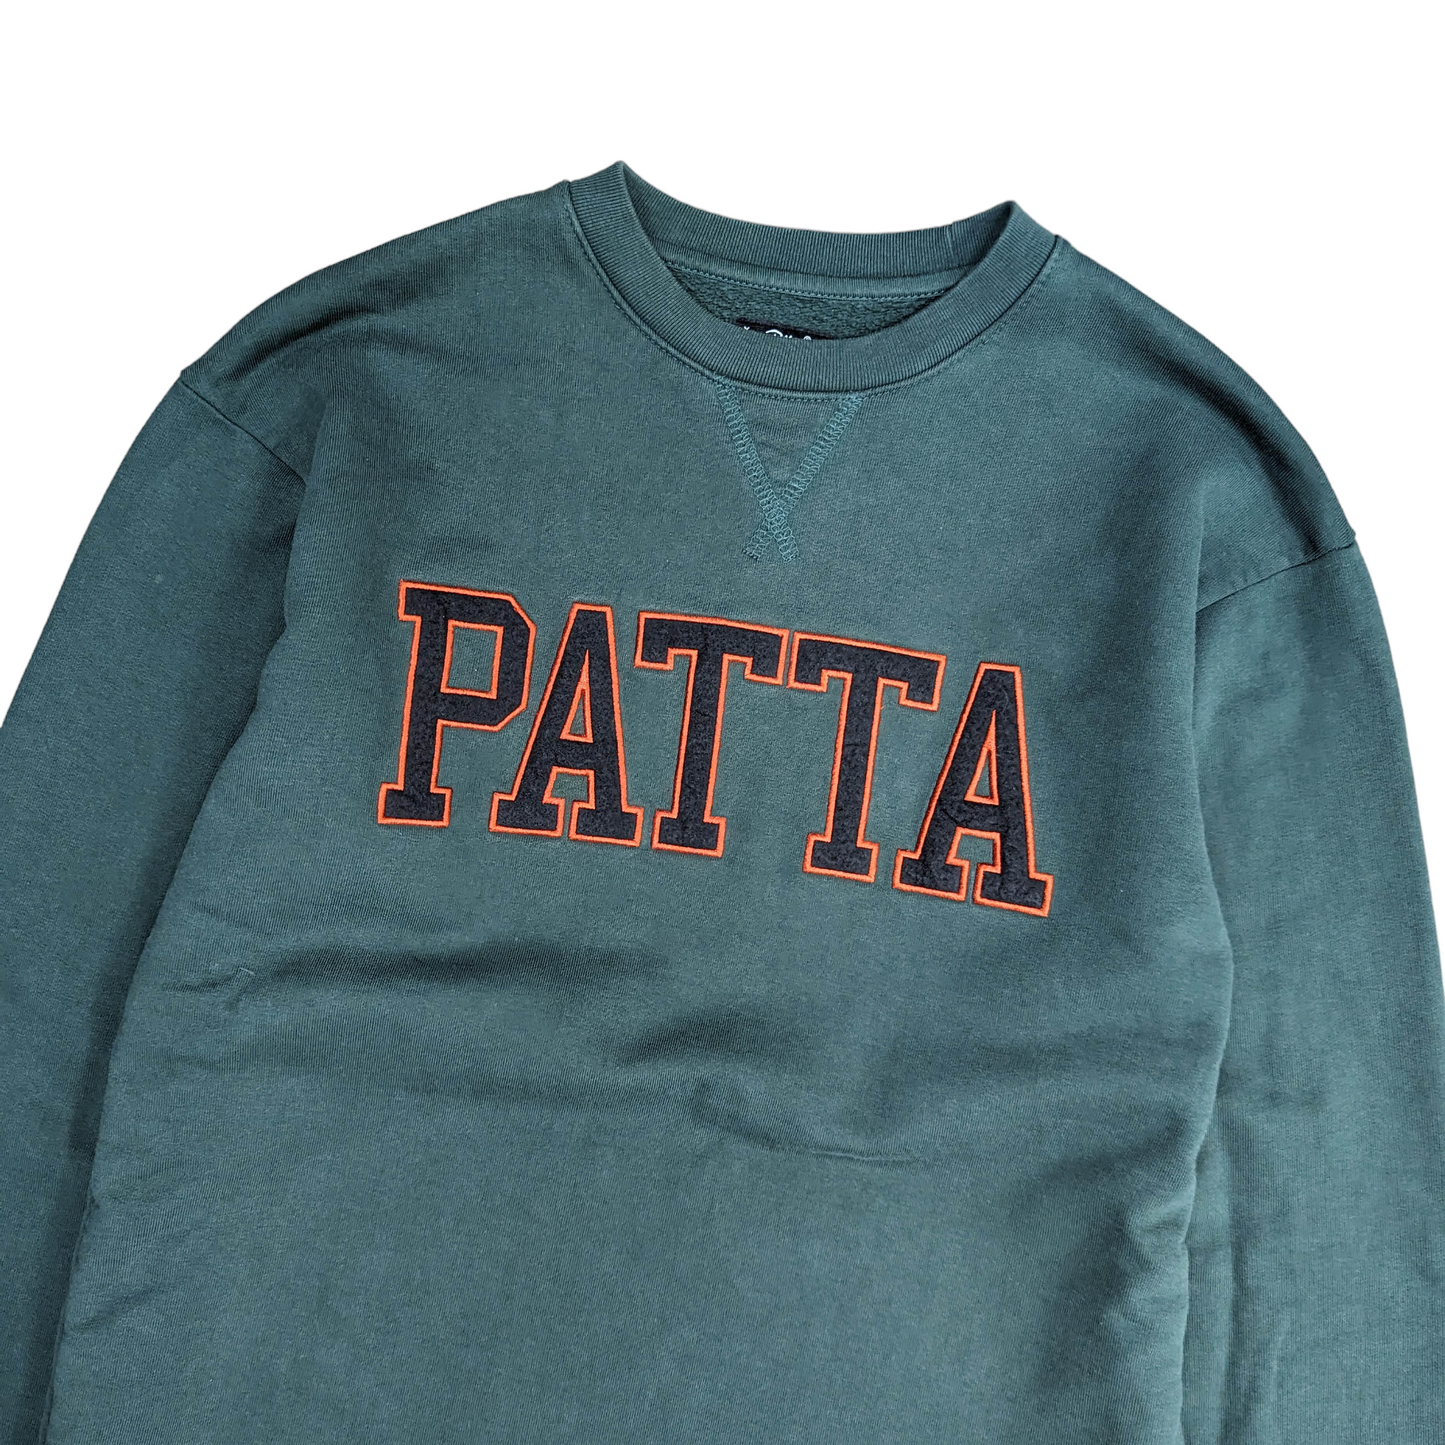 Patta Sweatshirt Size S